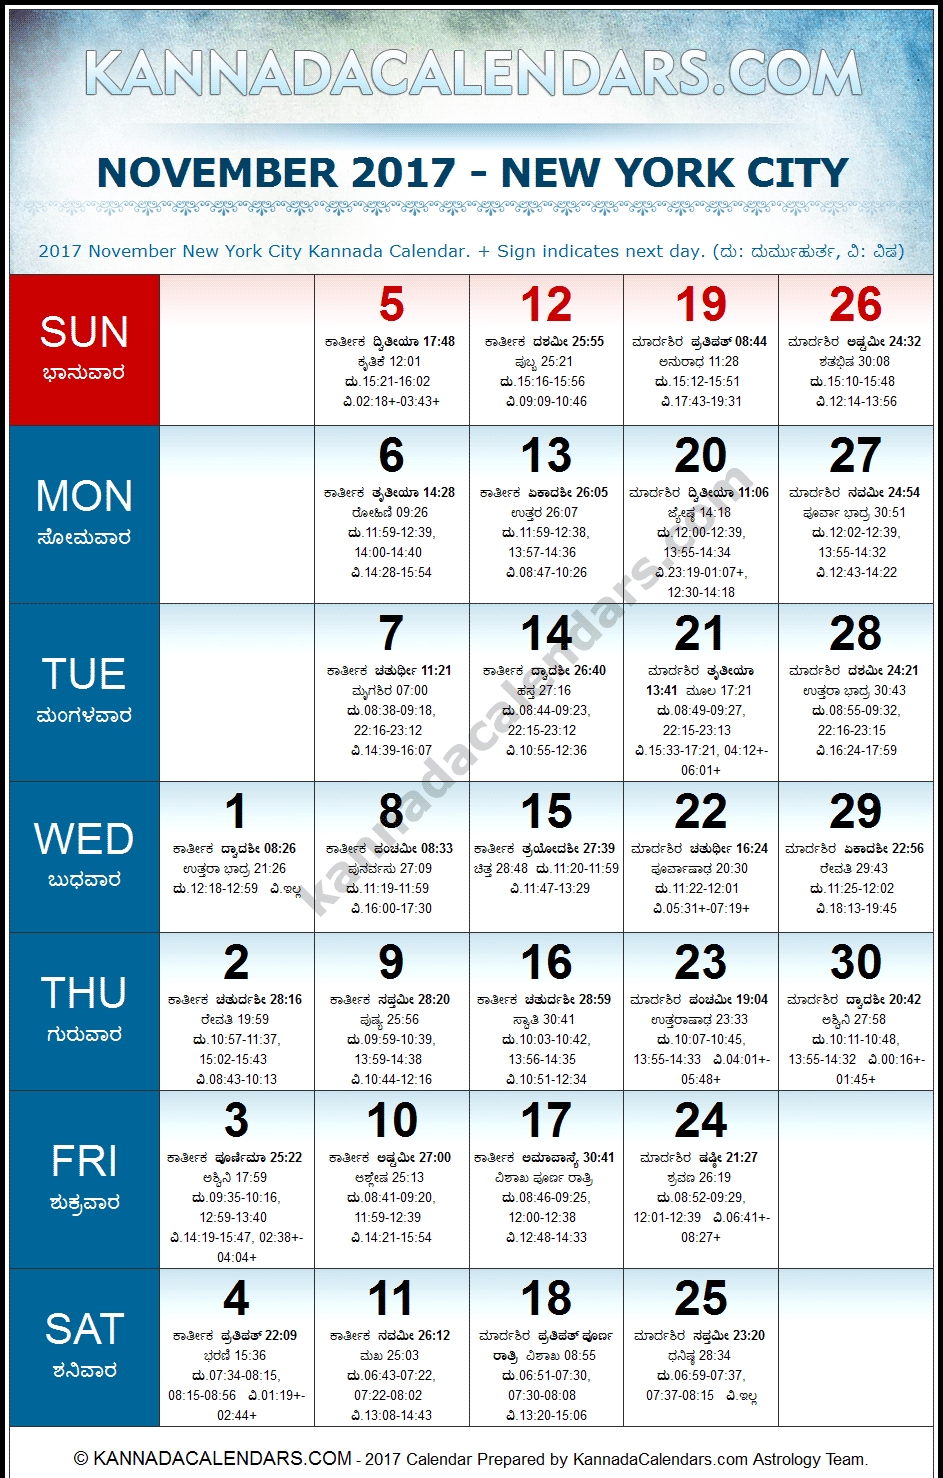 November 2017 Kannada Calendar for New York, USA